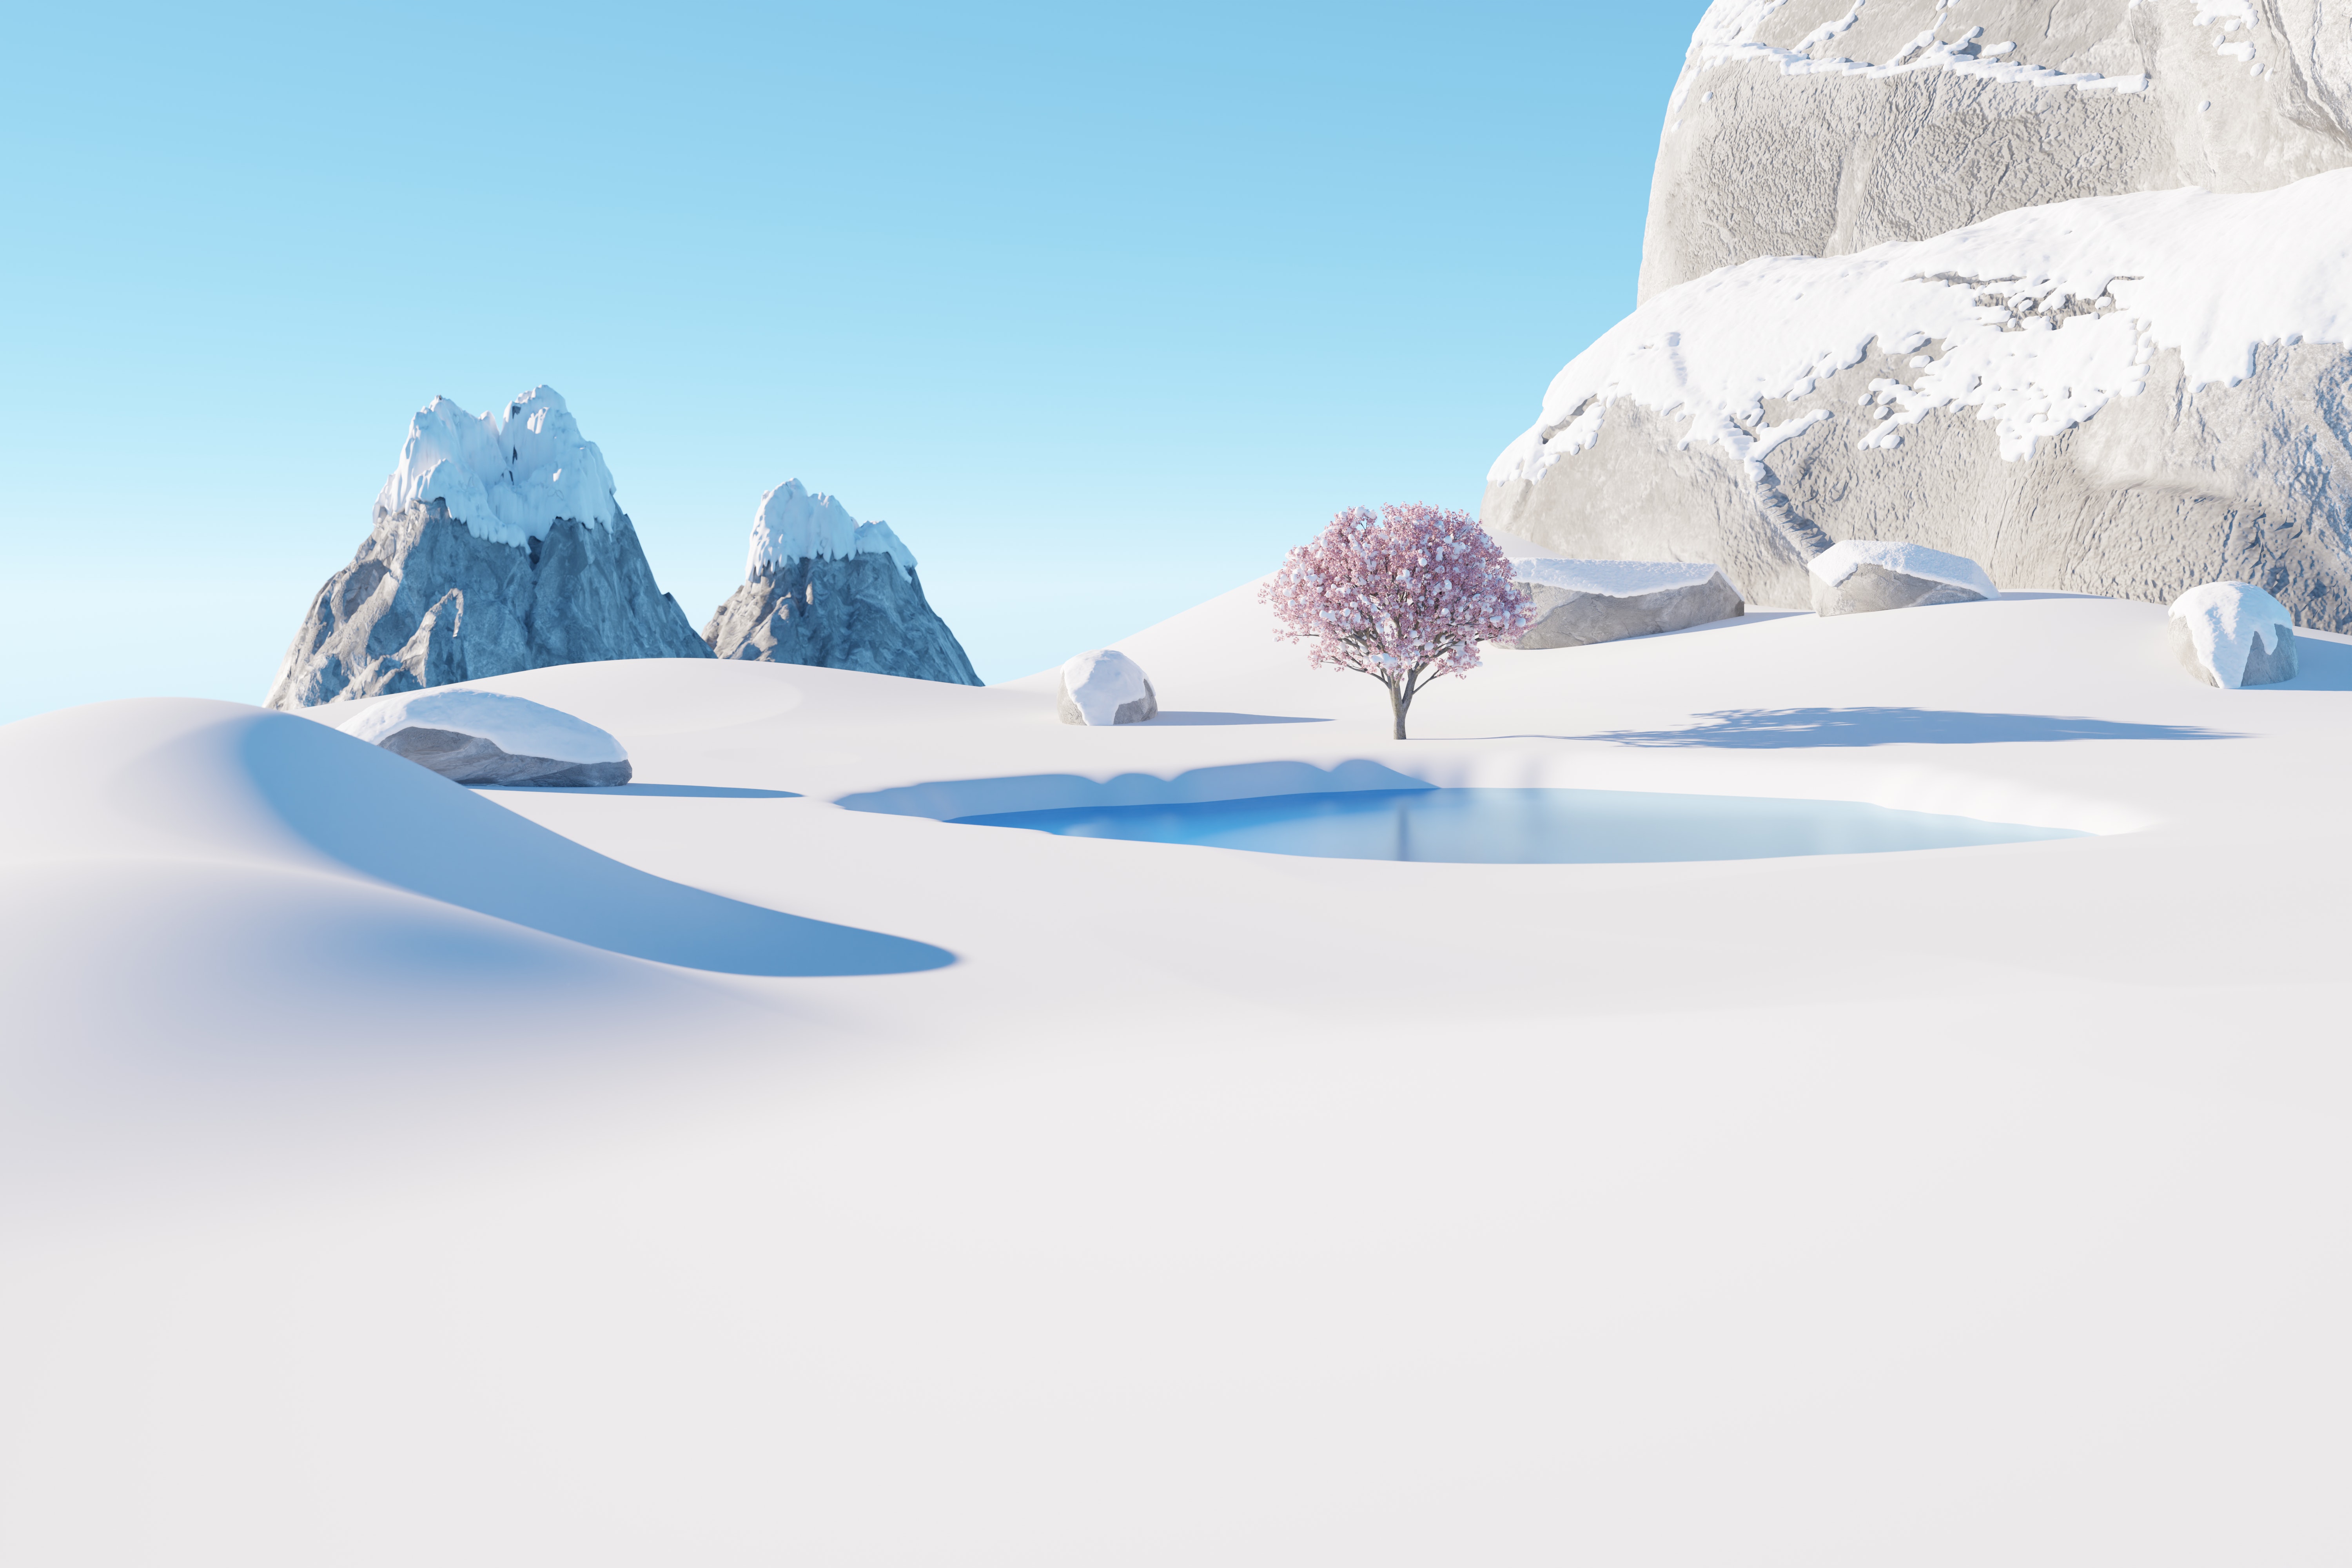 General 6000x4000 digital art artwork CGI minimalism nature landscape snow ice trees lake mountains white